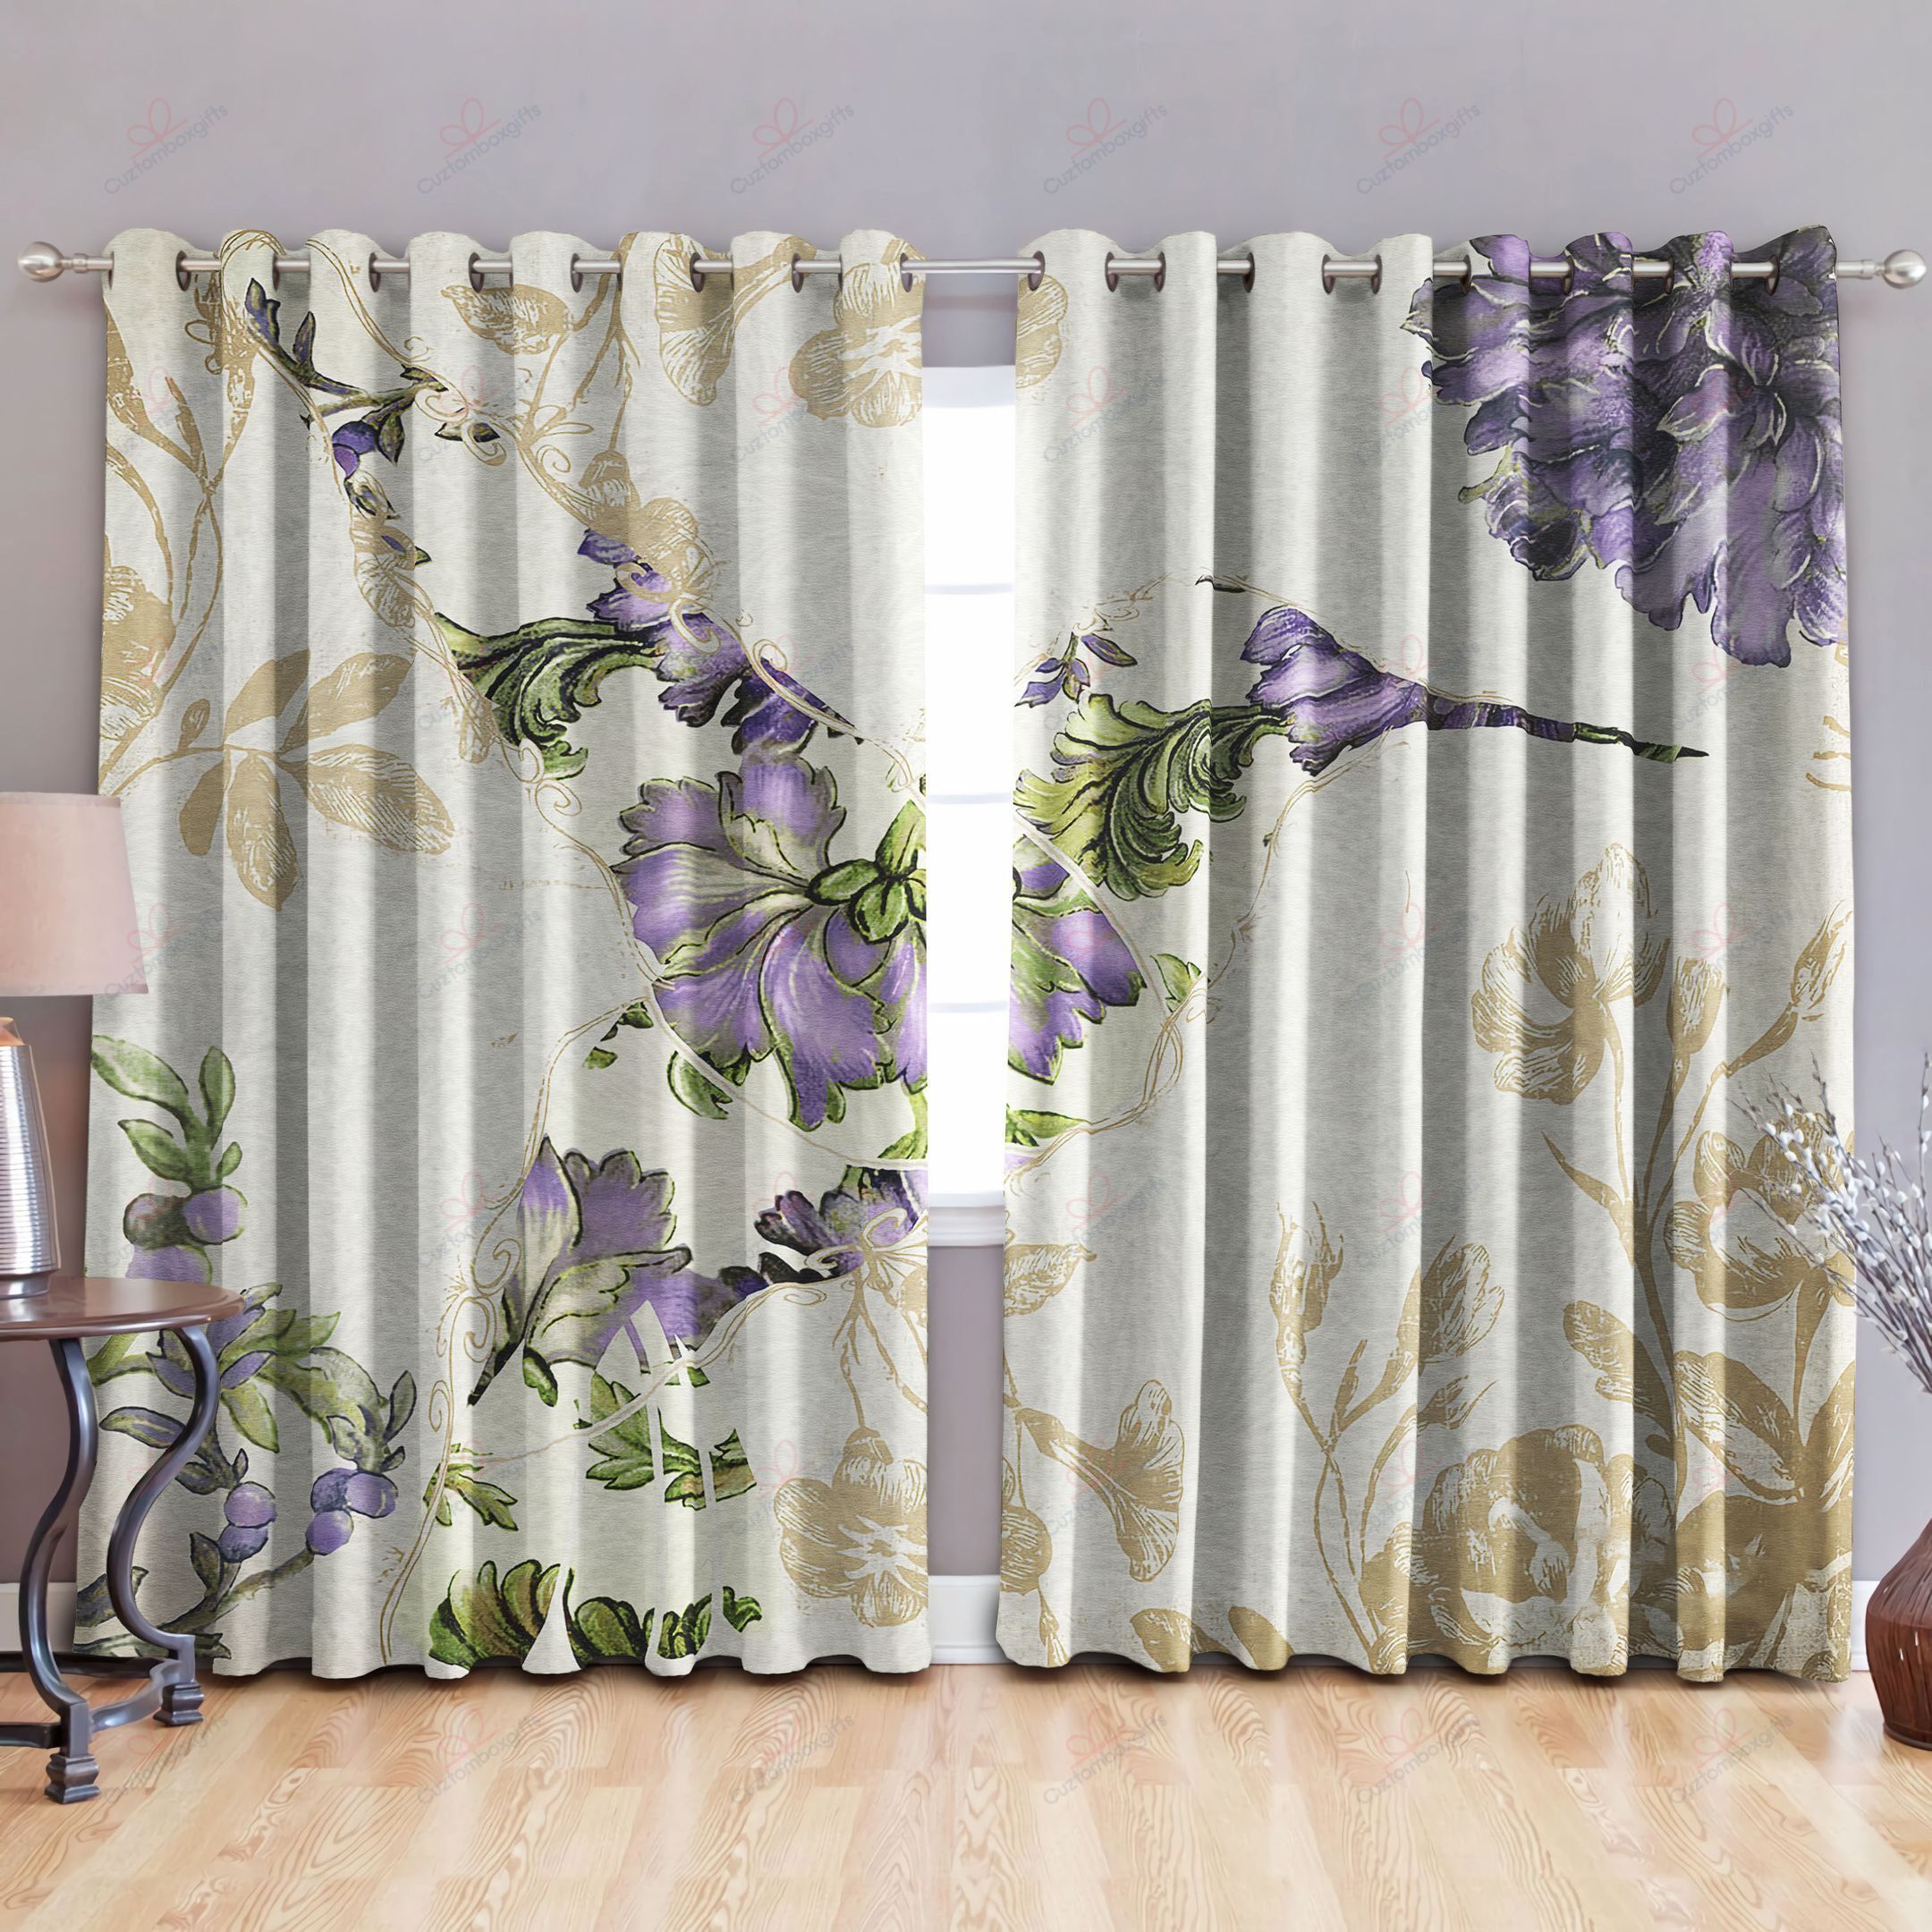 Hummingbird And Flower Printed Window Curtain Home Decor